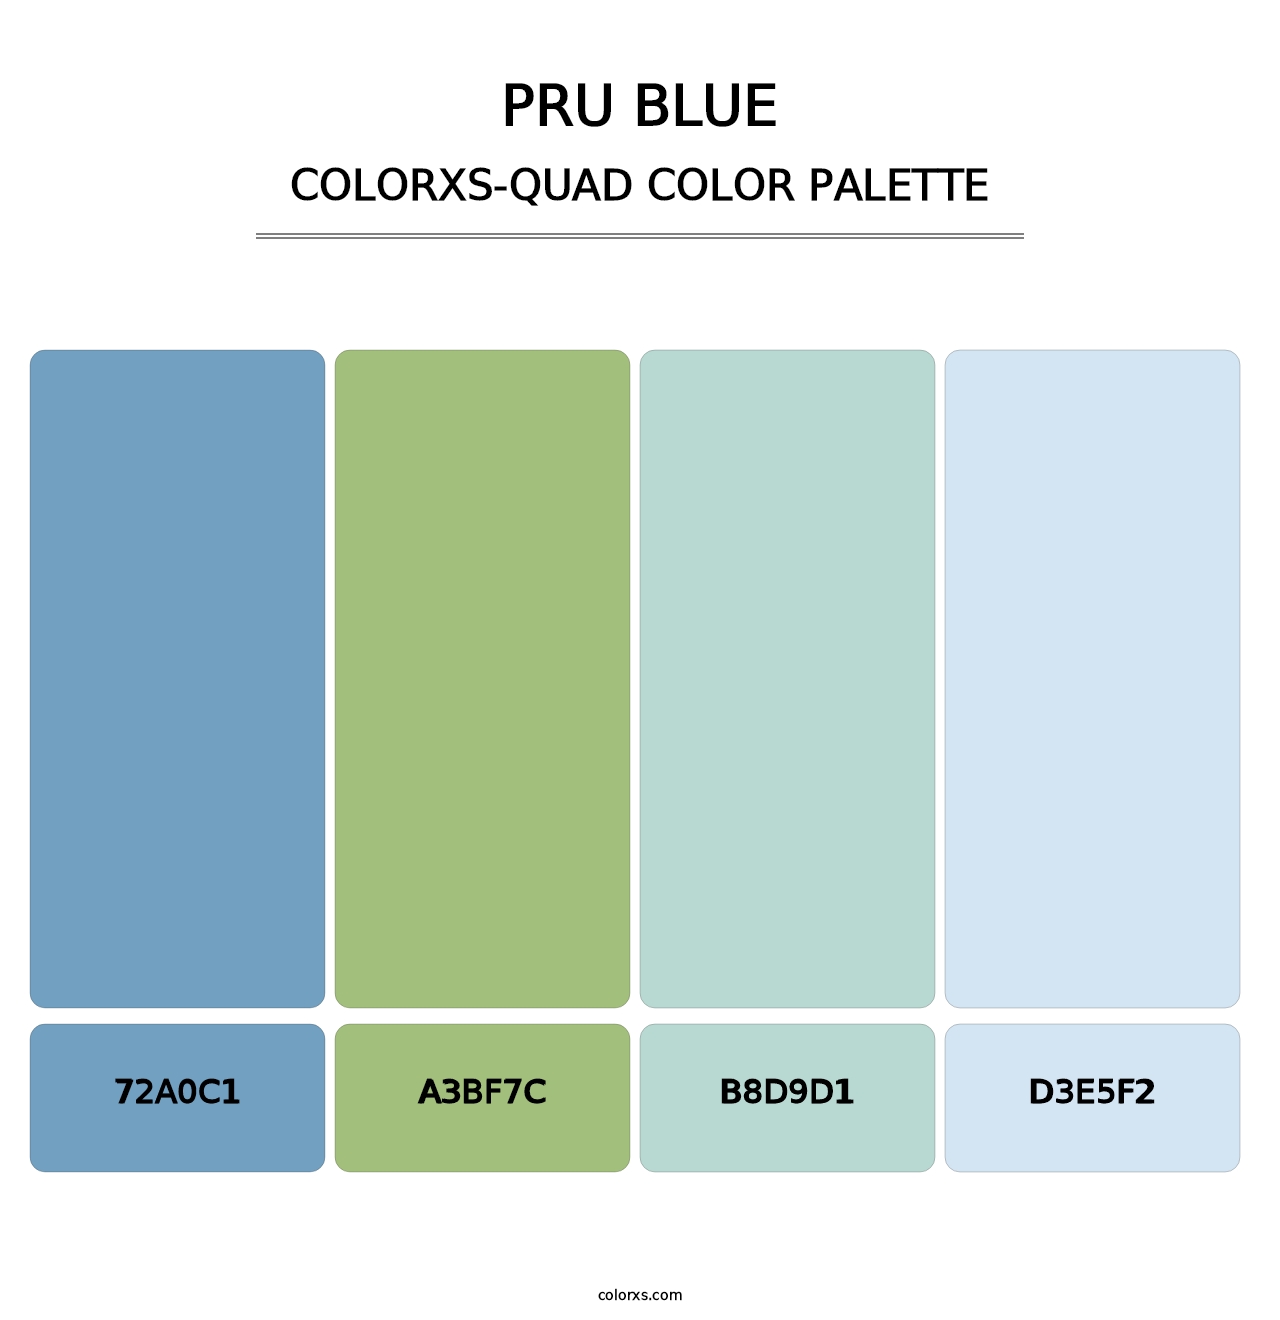 PRU Blue - Colorxs Quad Palette